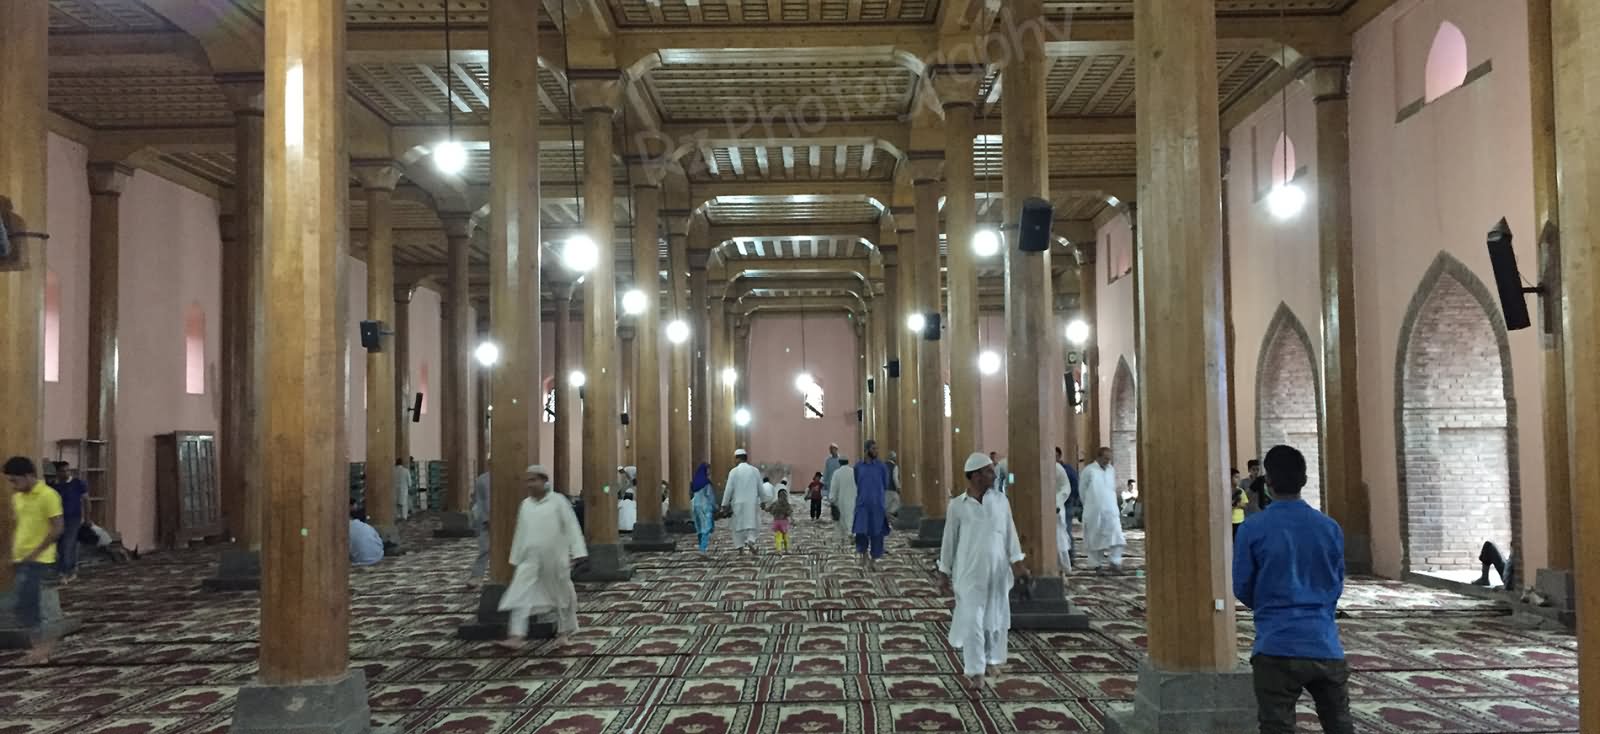 Prayer Hall Inside Jamia Masjid